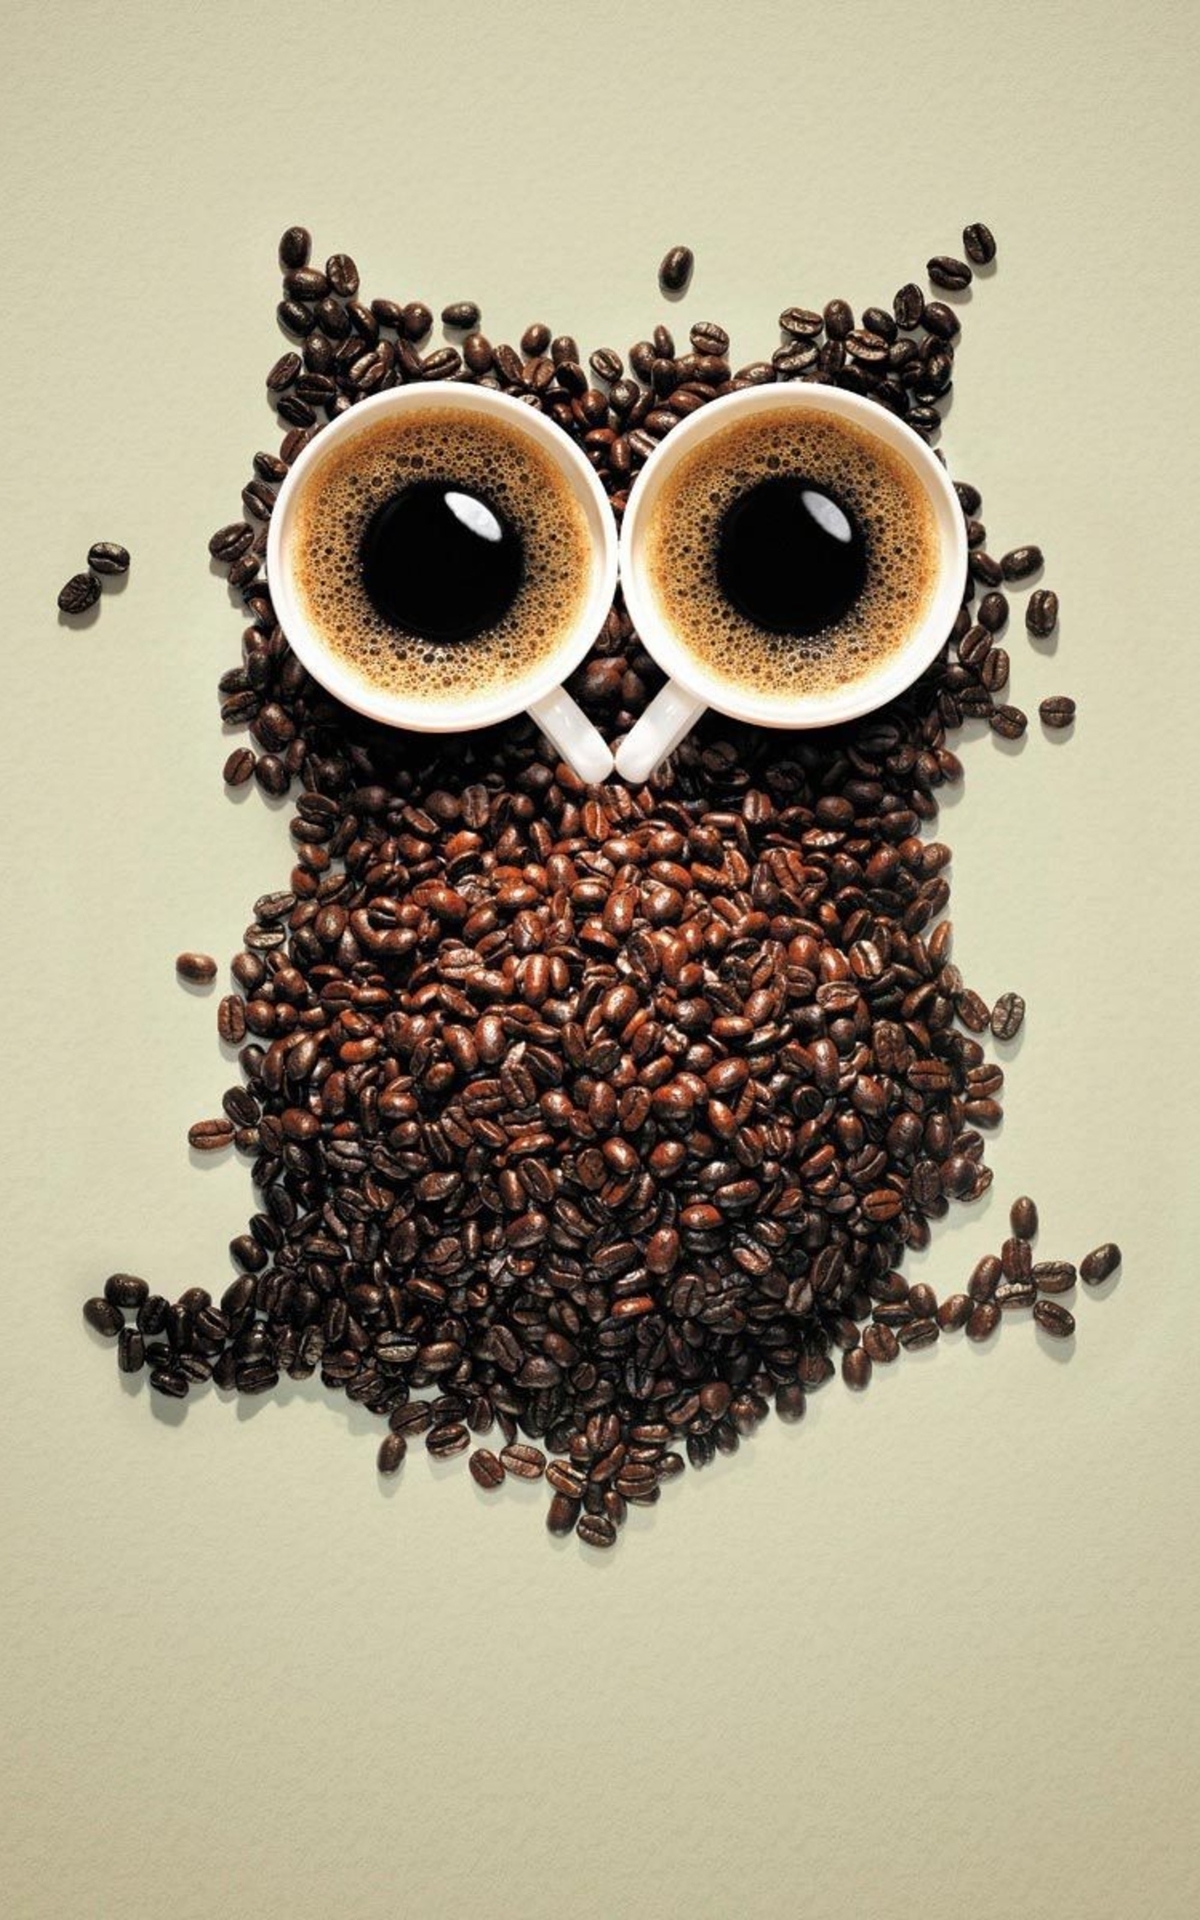 Image: Owl, coffee, grain, circles, eyes